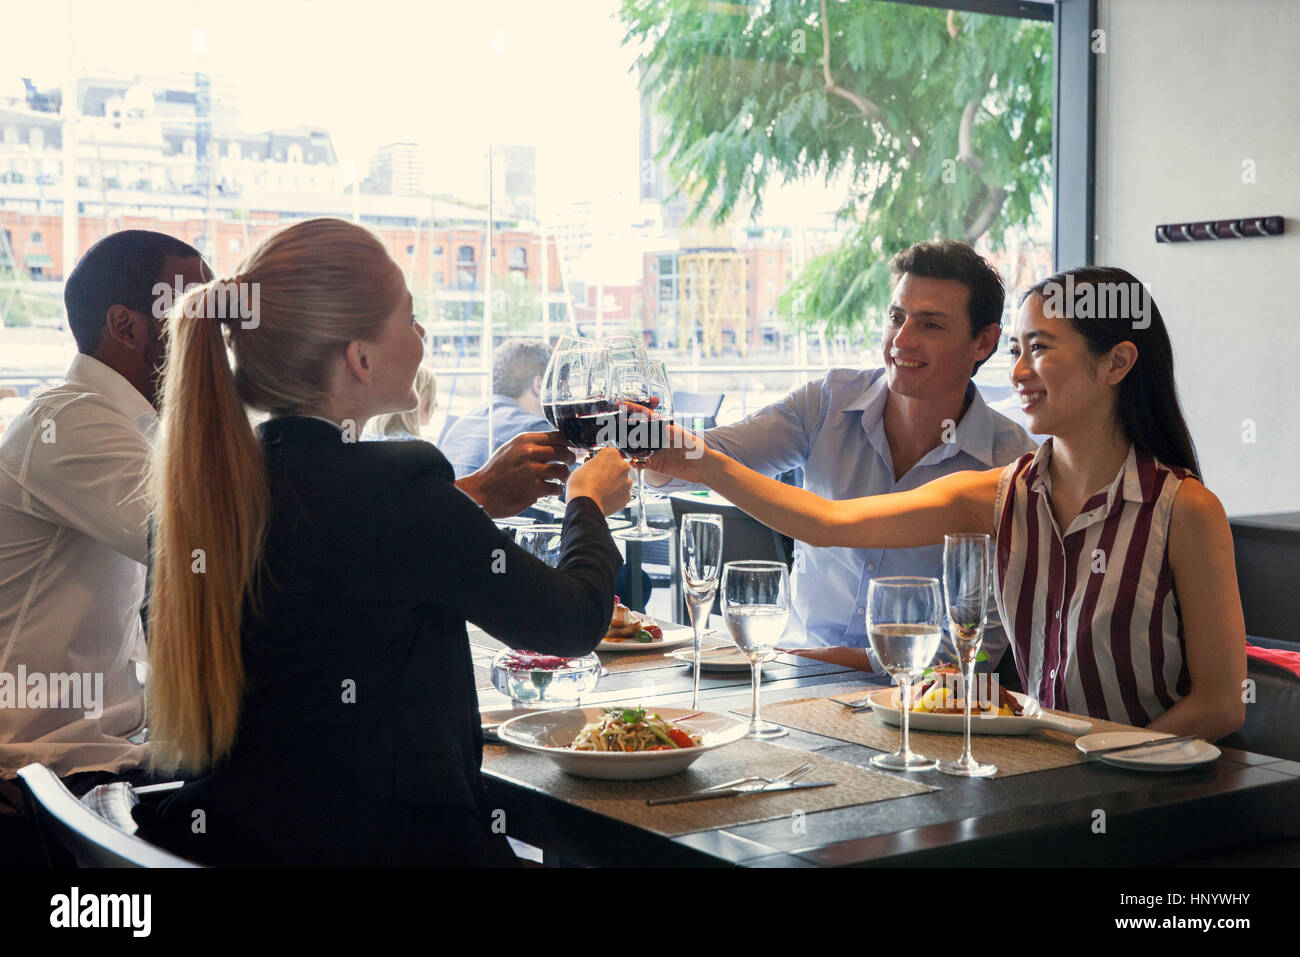 Friends clinking wine glasses in restaurant Stock Photo